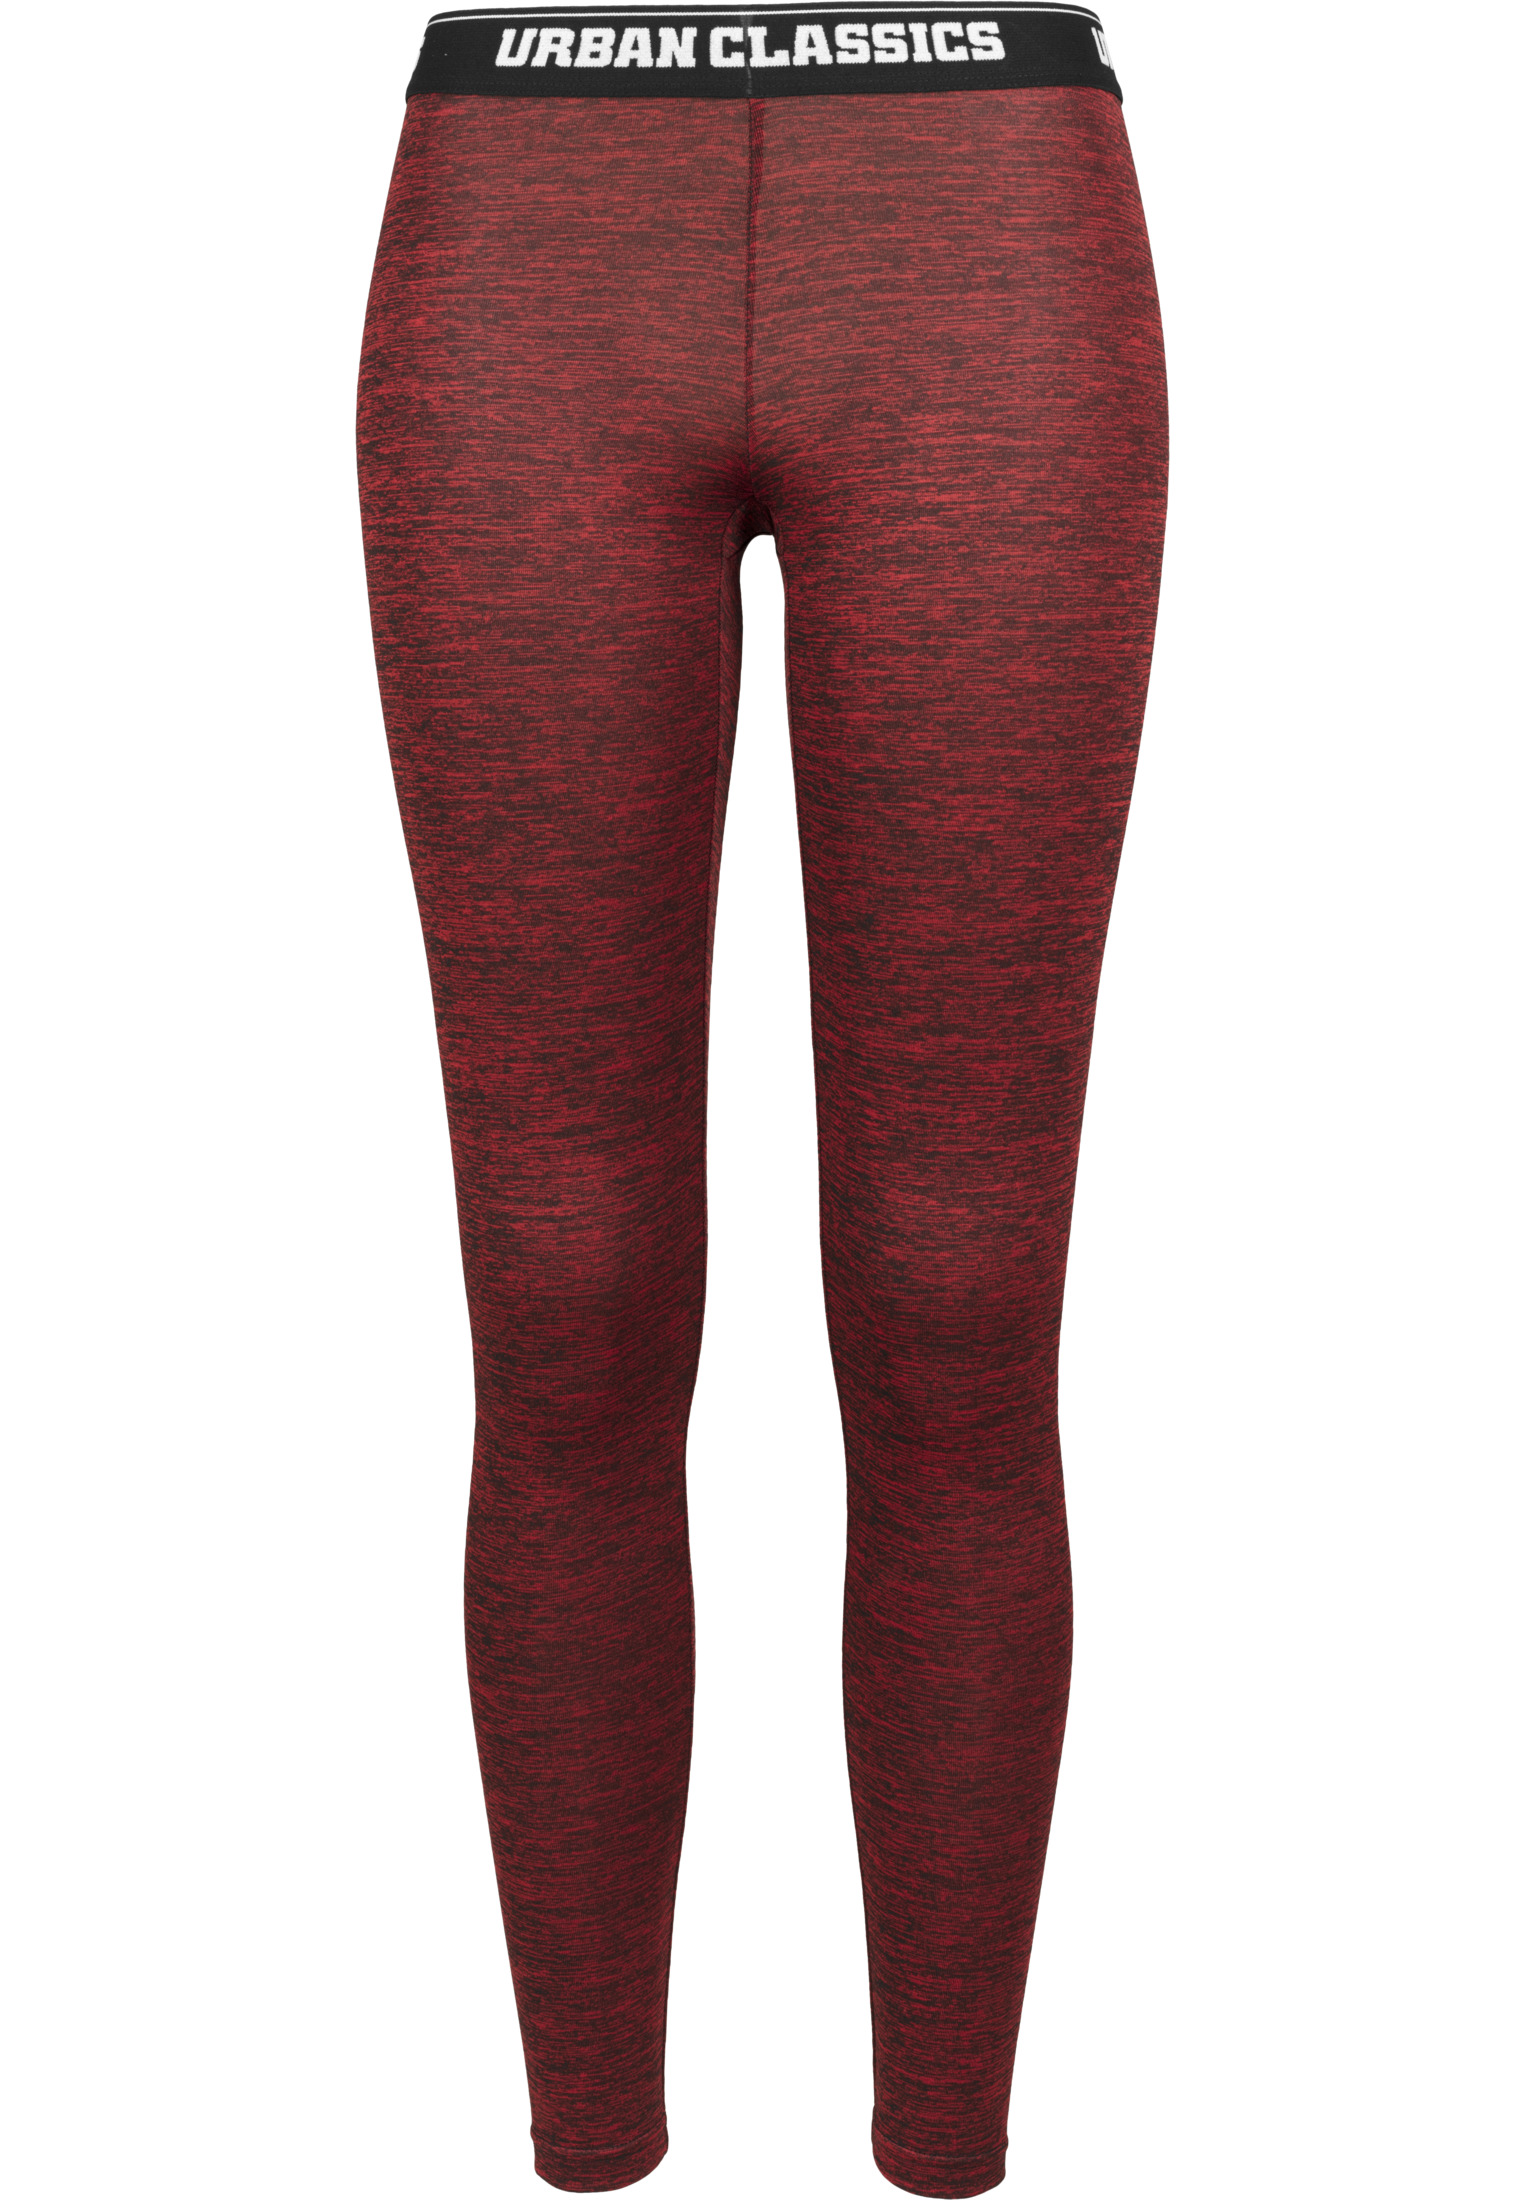 Athleisure Ladies Active Melange Logo Leggings in Farbe red/black/black